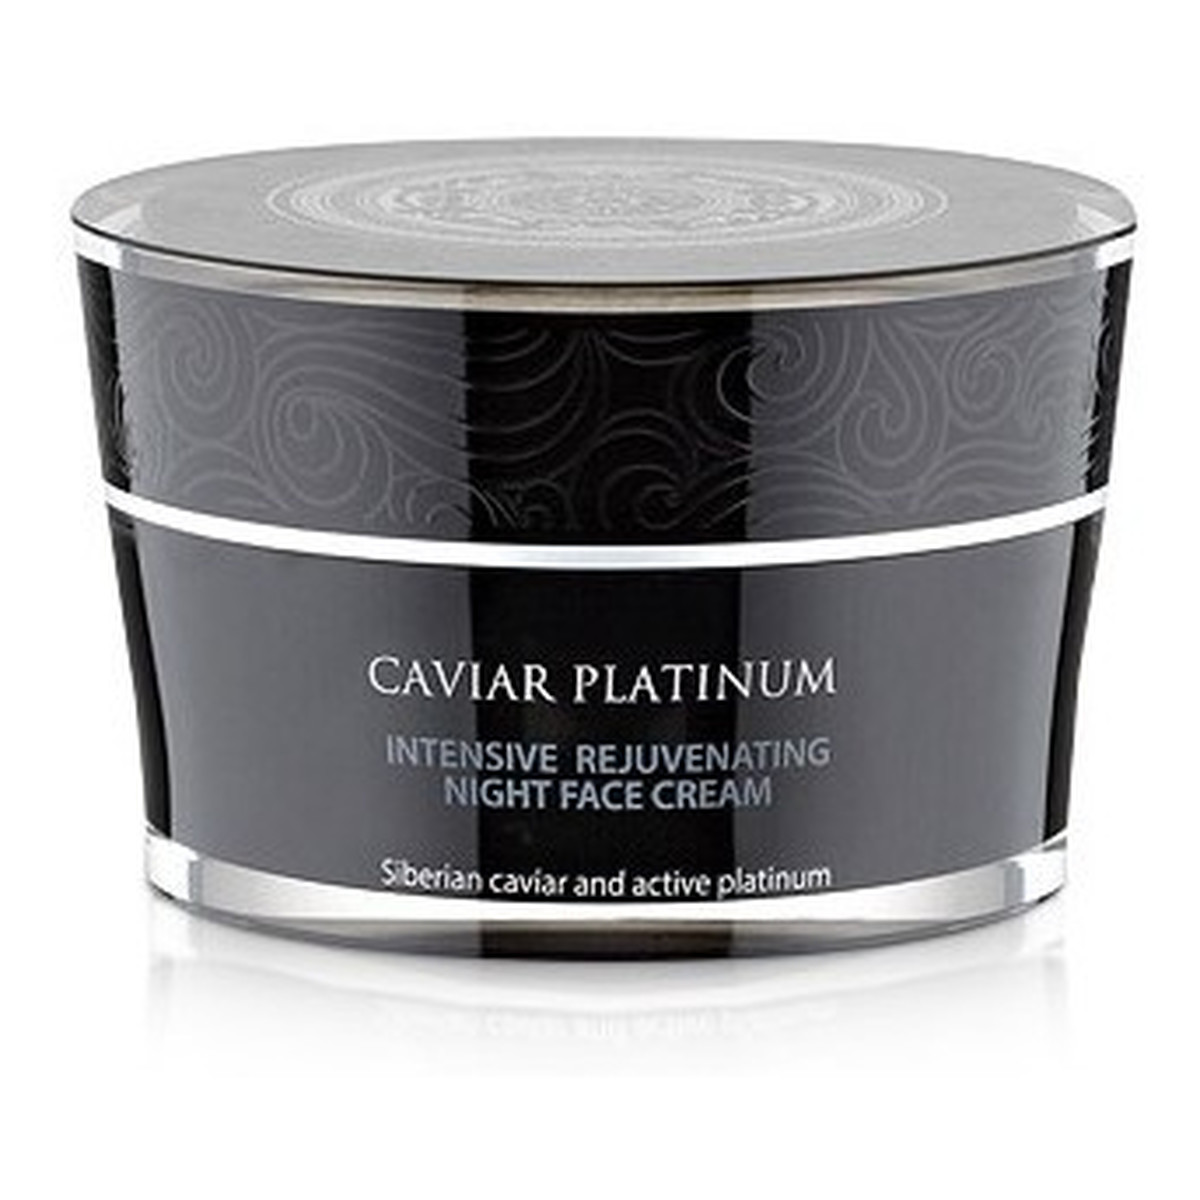 Natura Siberica Caviar Platinum Intensive Rejuvenating Night Face Cream Intensywnie odmładzający krem do twarzy na noc 50ml